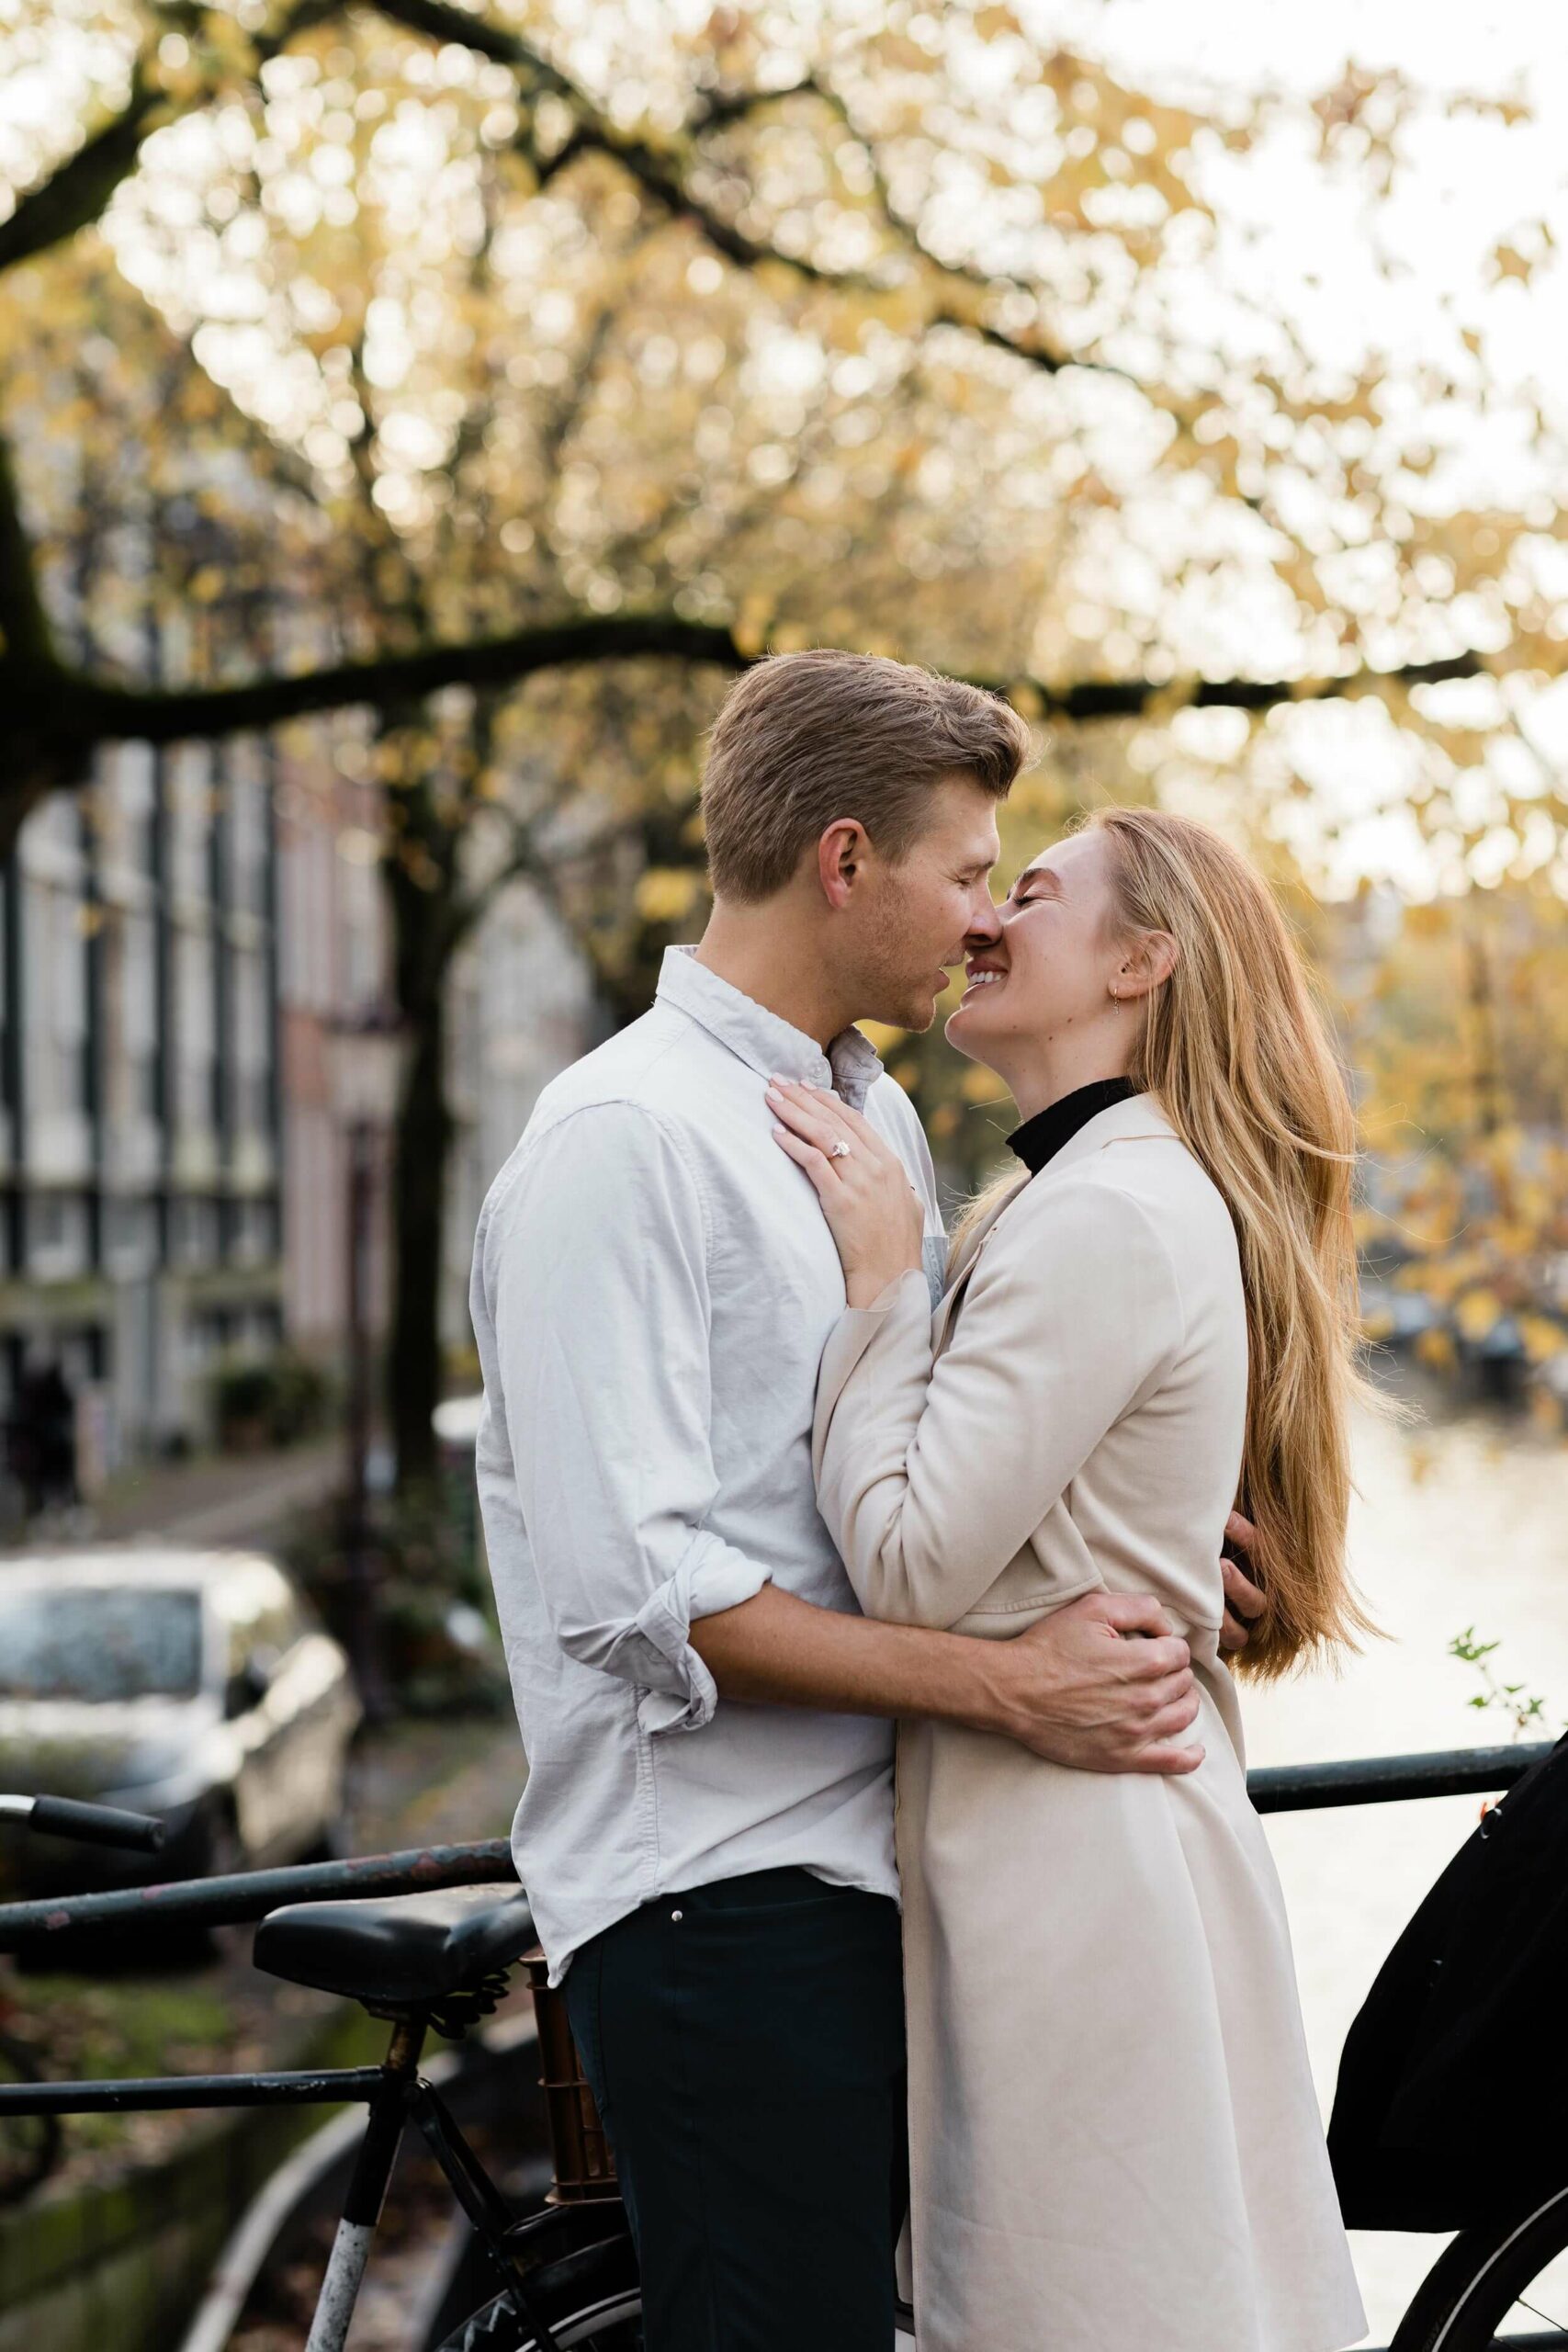 alt="engagement kiss surprise proposal in Amsterdam"